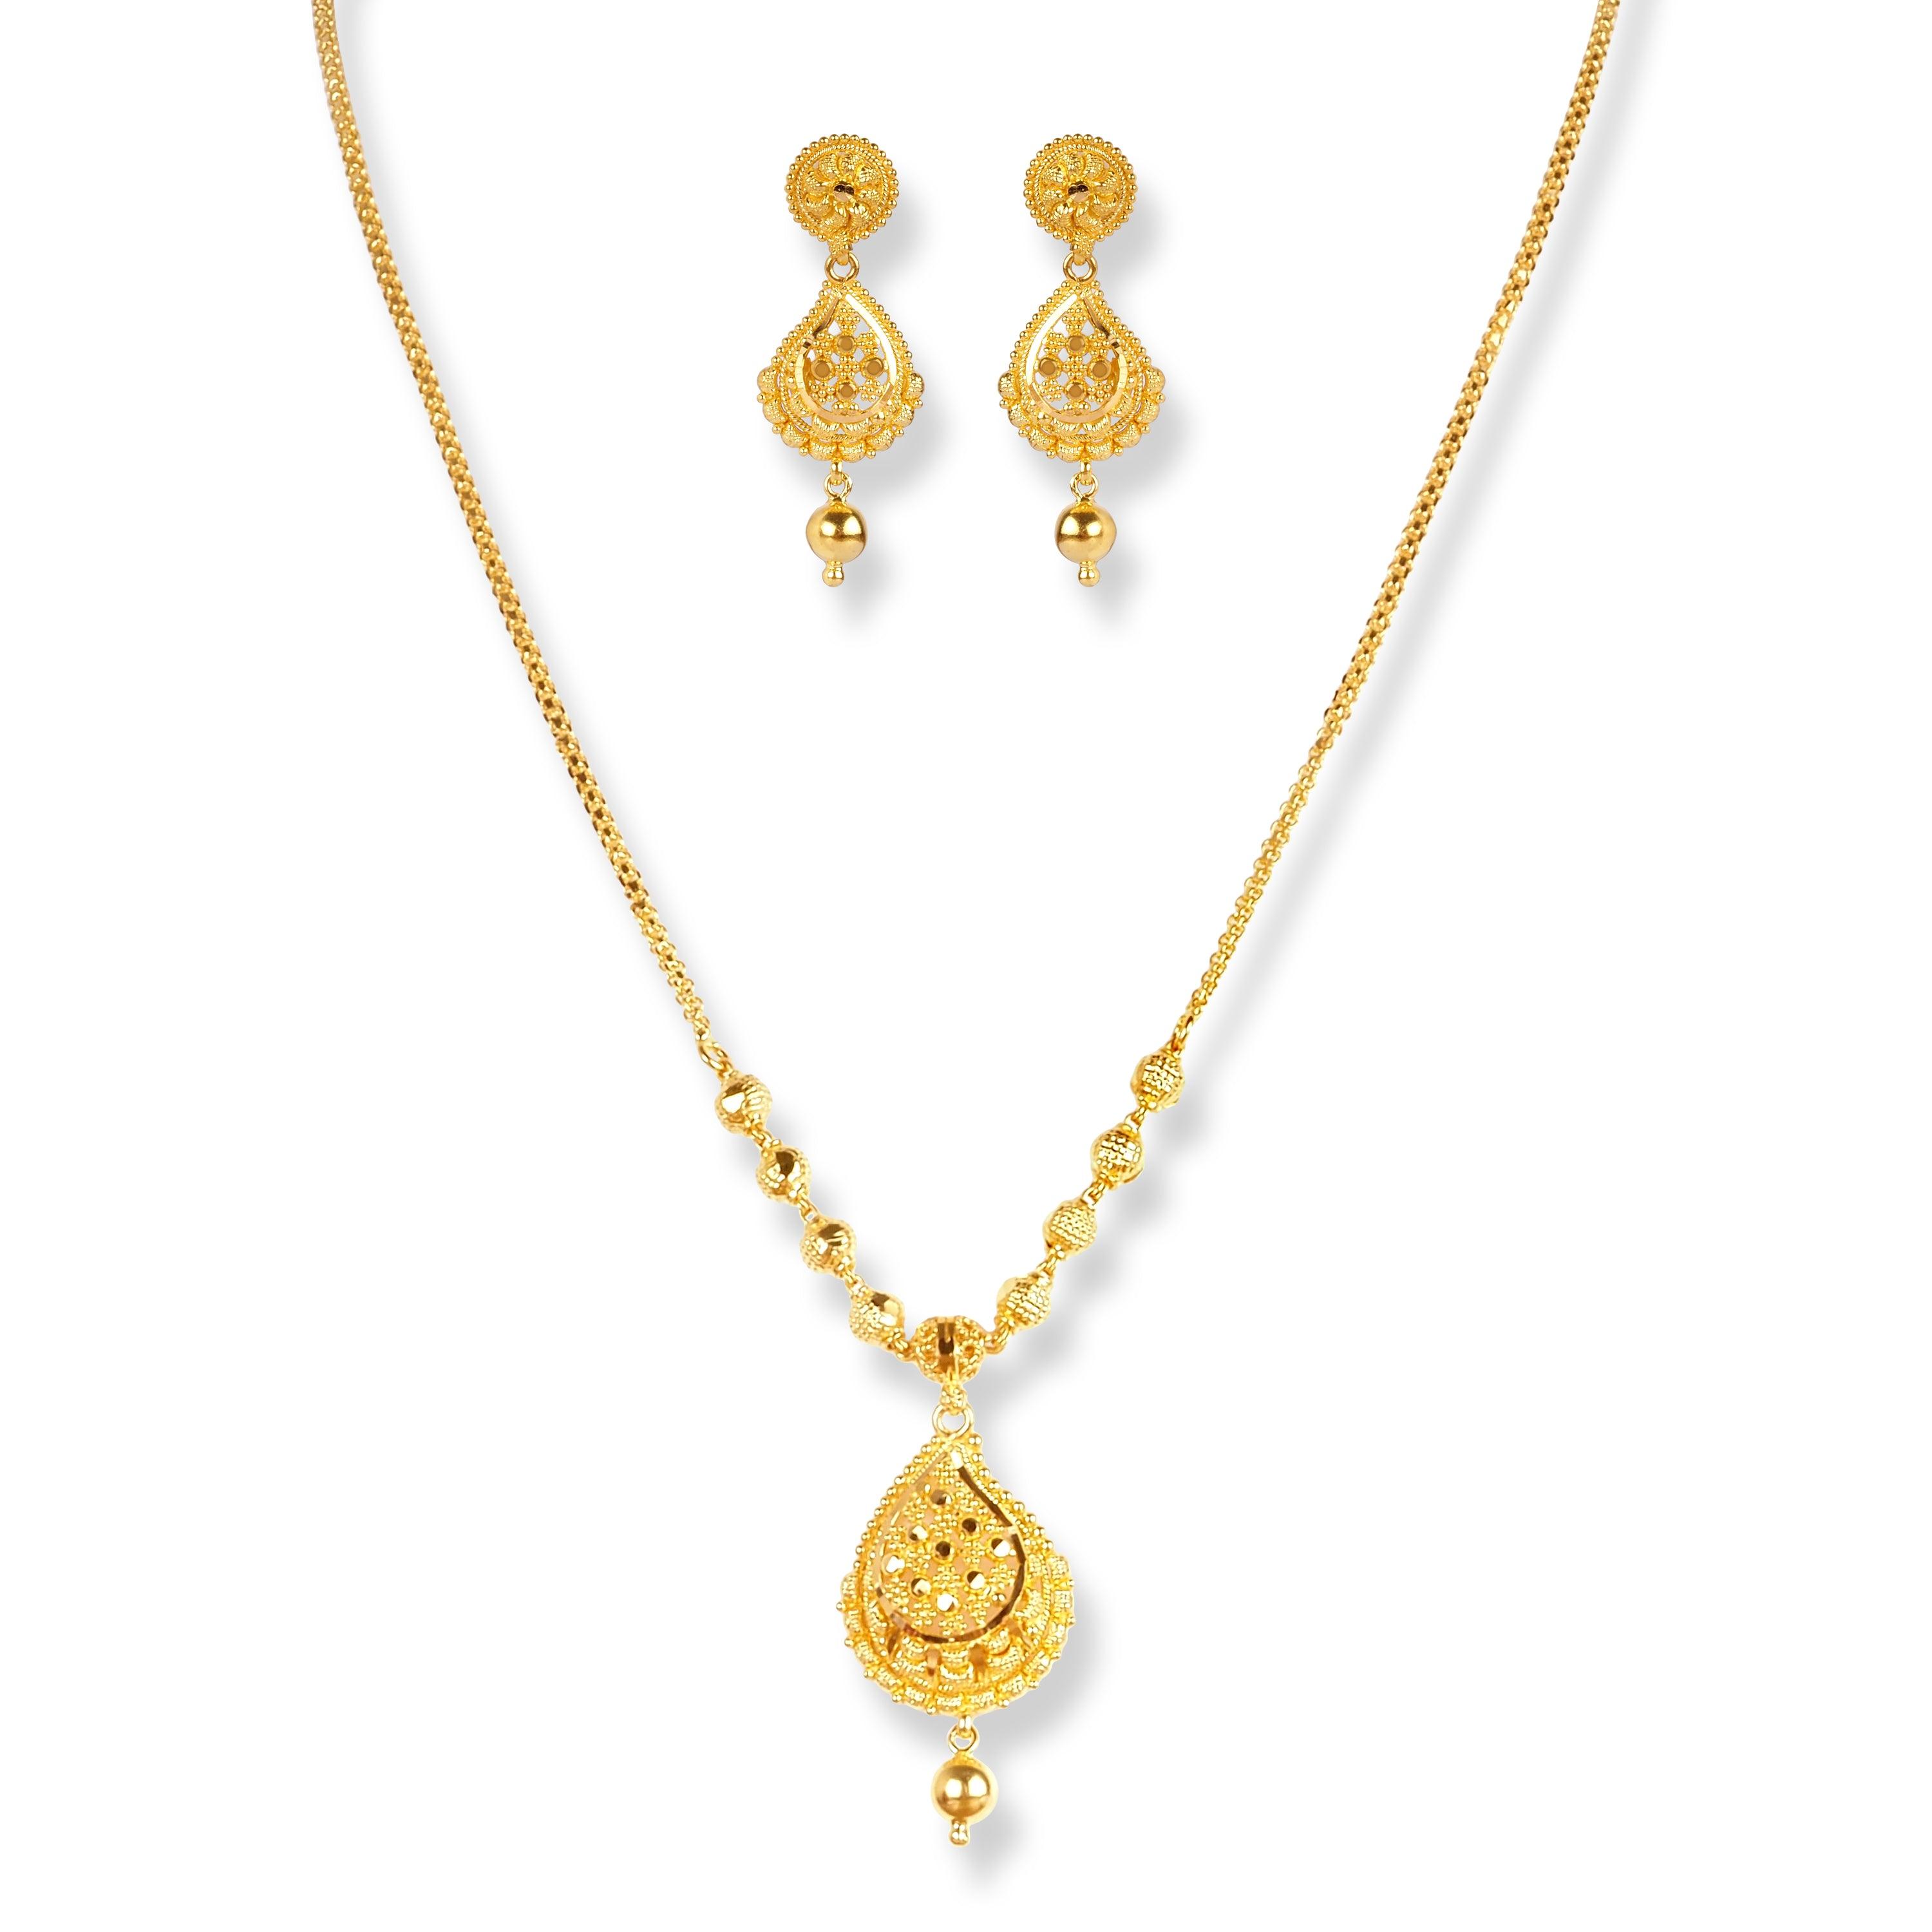 22ct Gold Set with Filigree Work N-7915 - Minar Jewellers